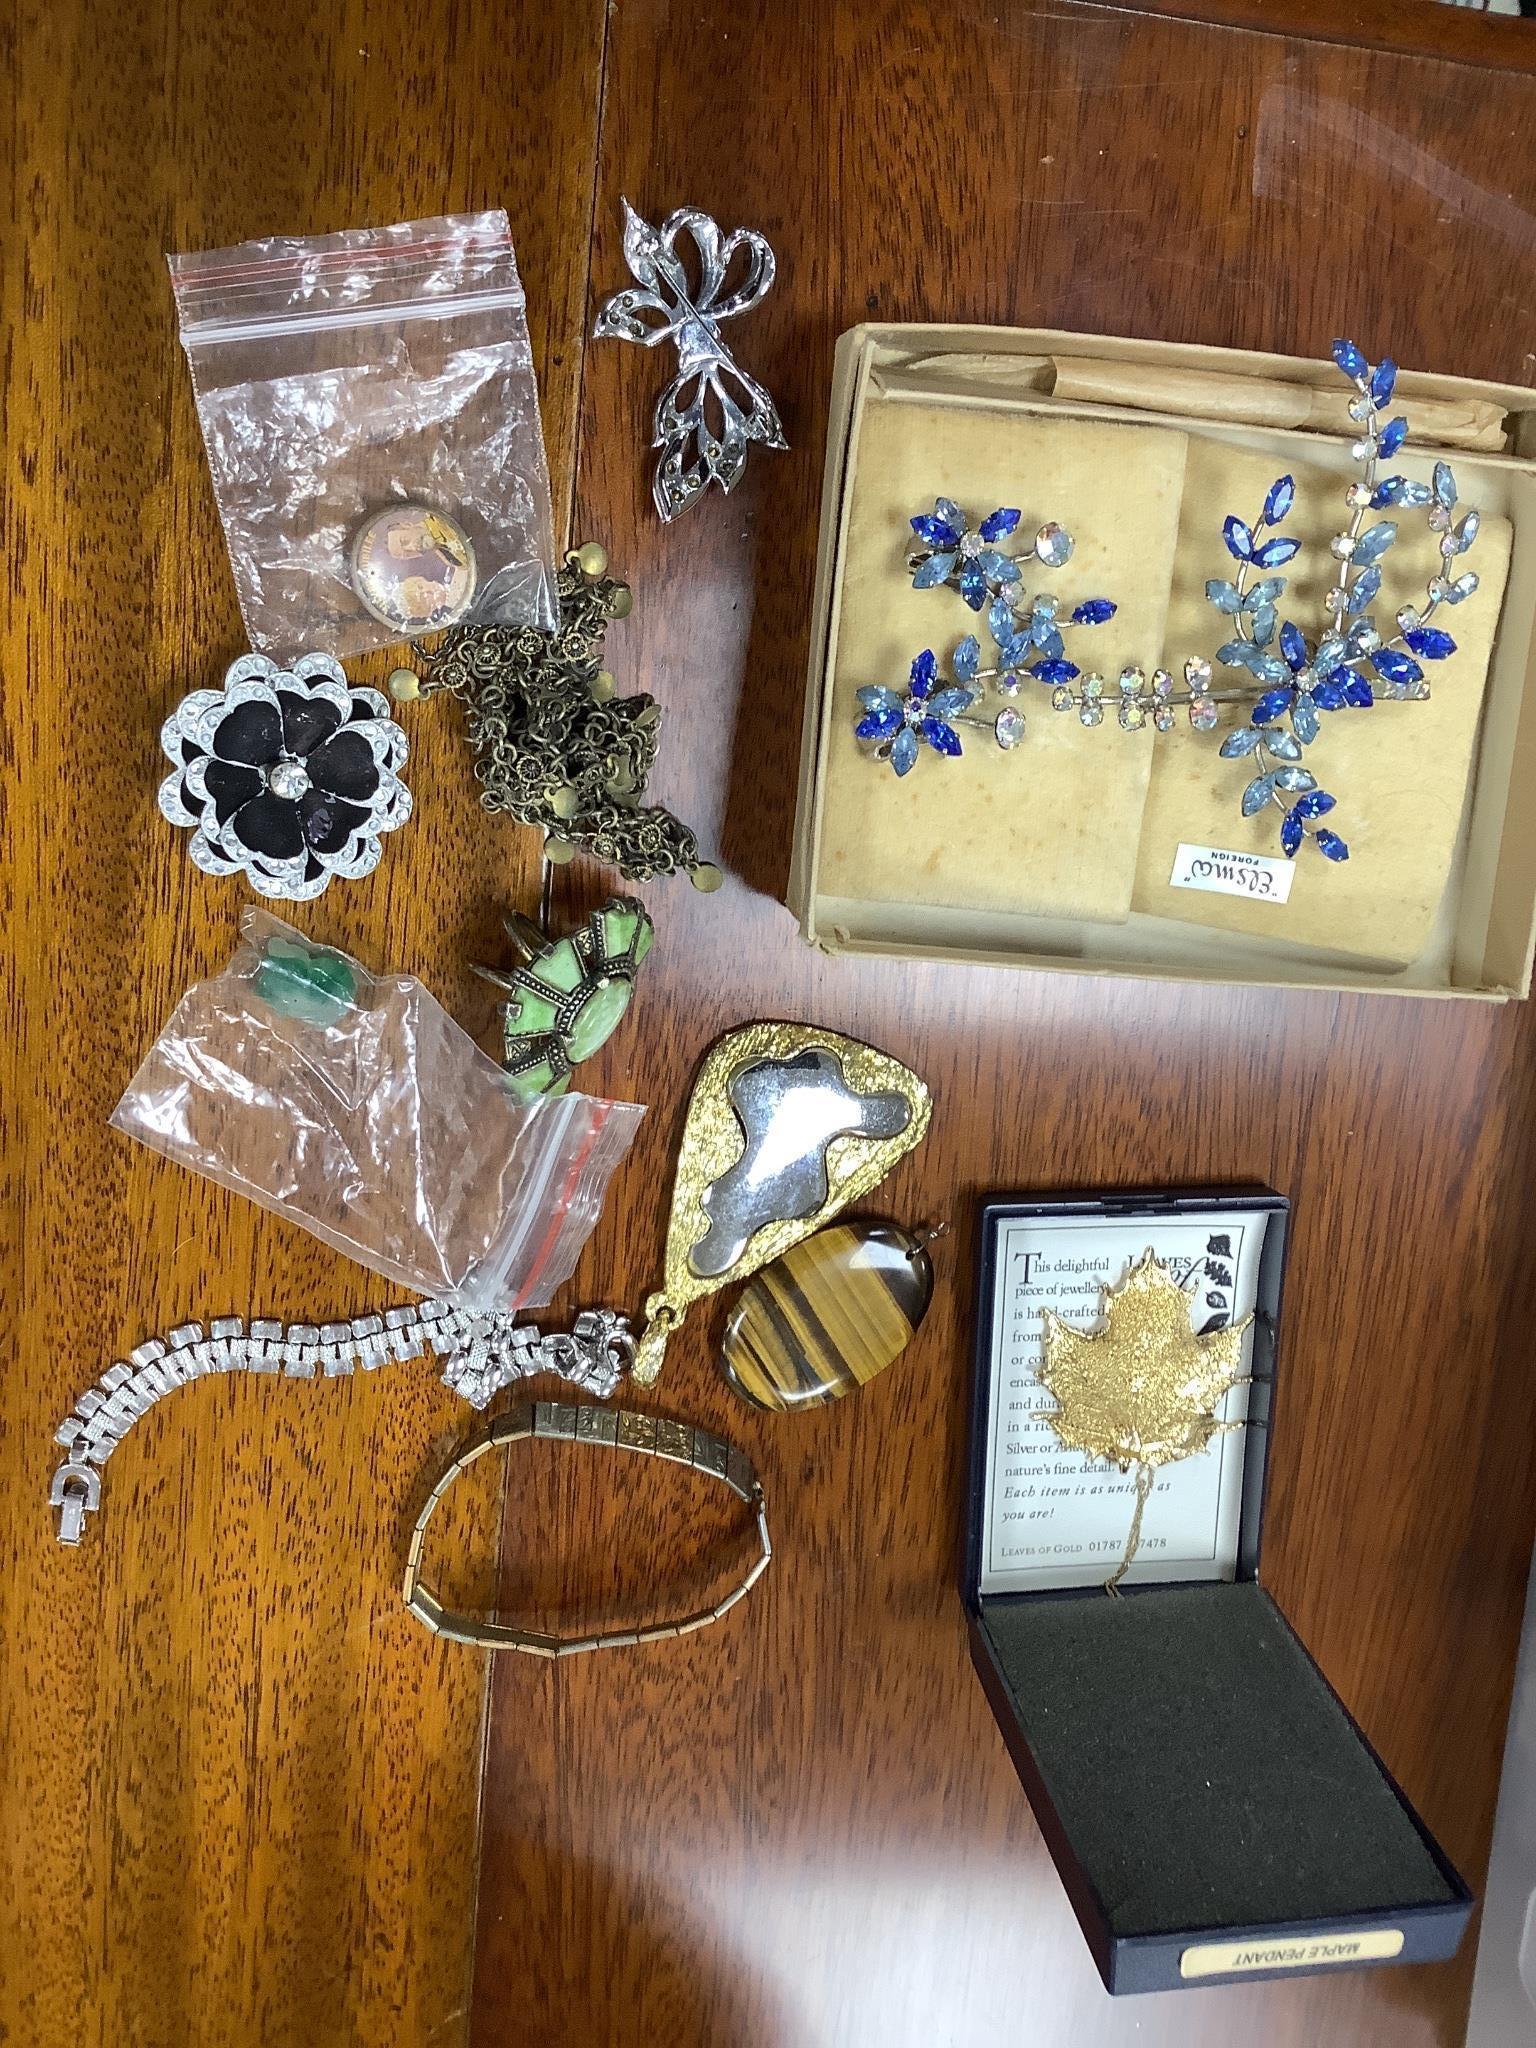 A box of costume jewellery.